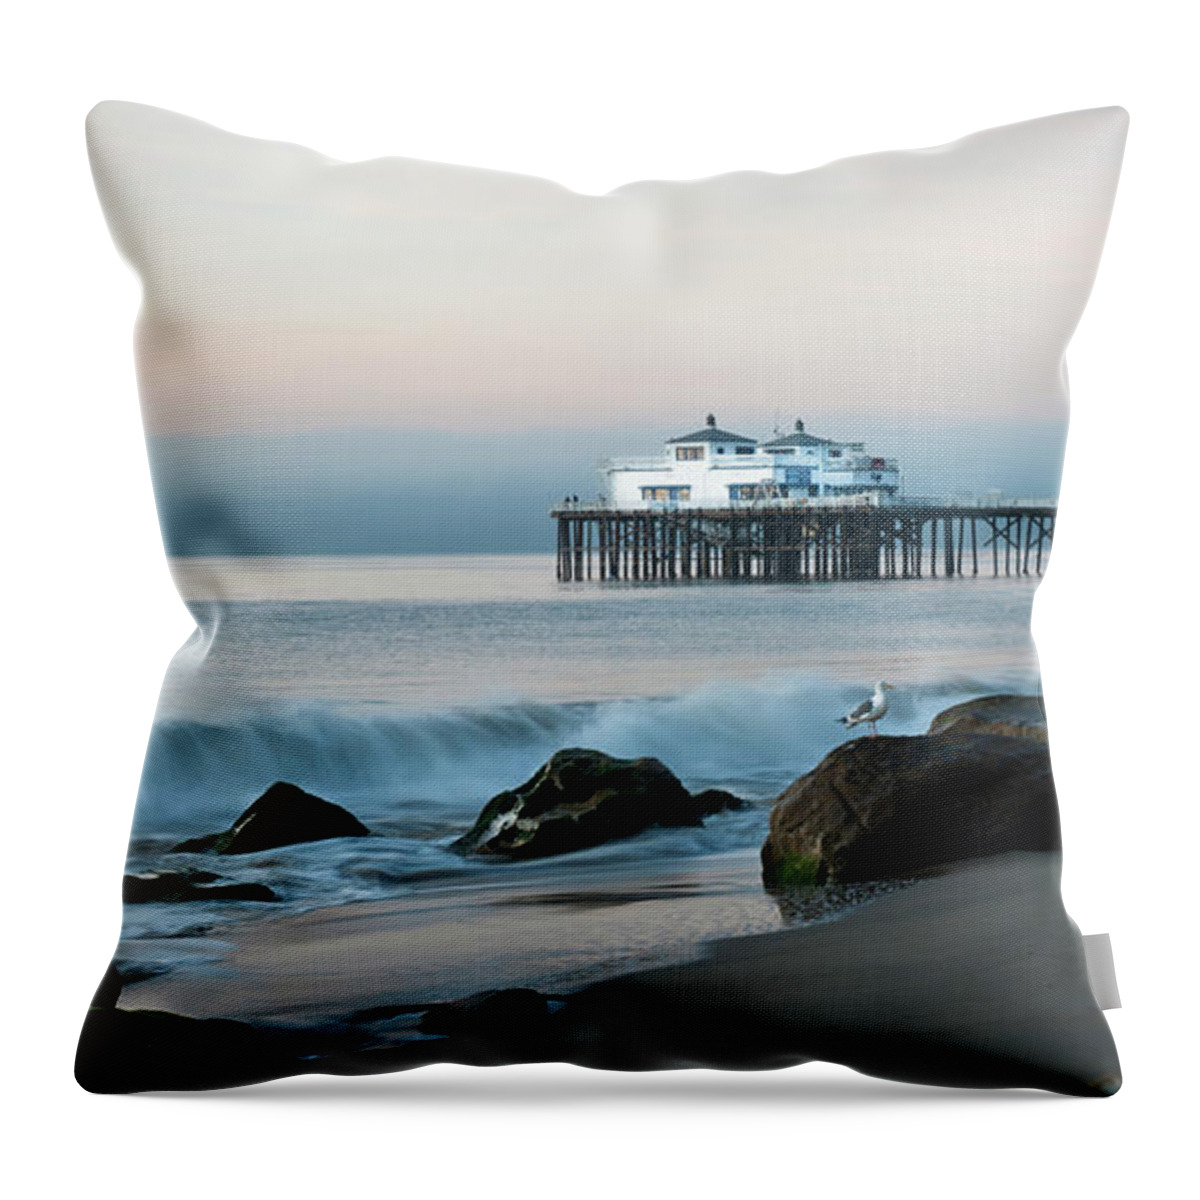 Scenics Throw Pillow featuring the photograph Malibu Beach by Jenniferphotographyimaging